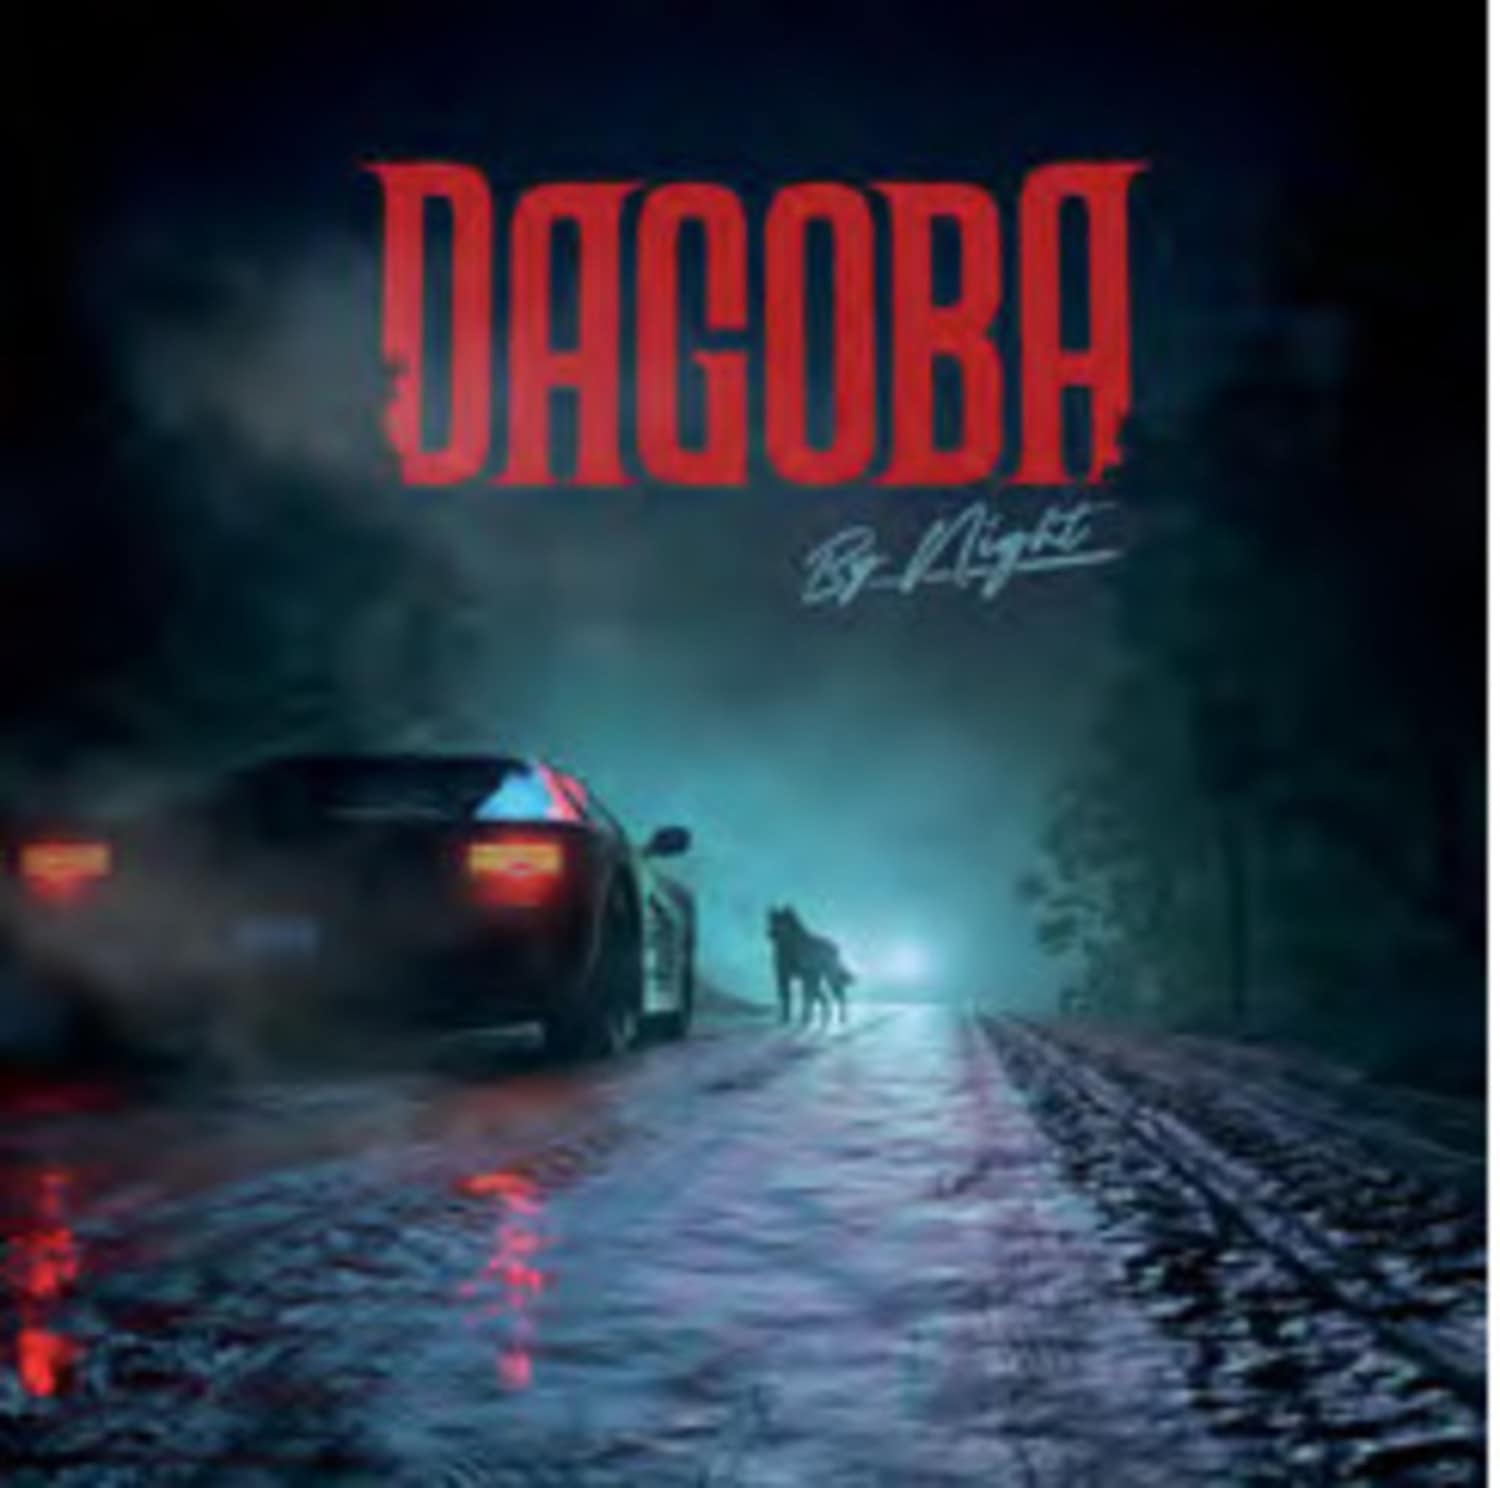 Dagoba - BY NIGHT 